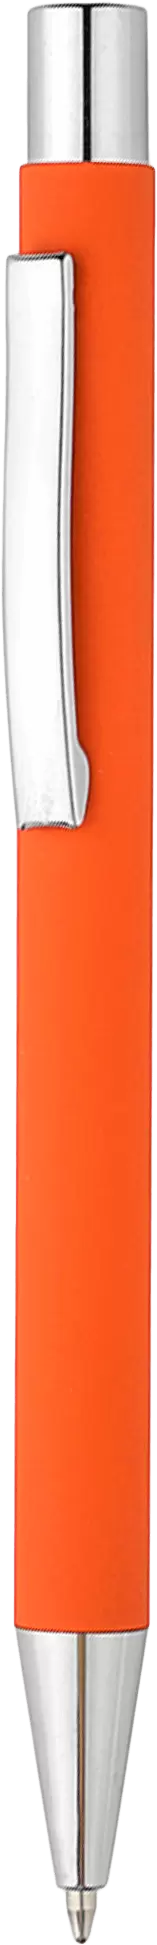 Ручка MAX SOFT MIRROR Оранжевая 1111-05